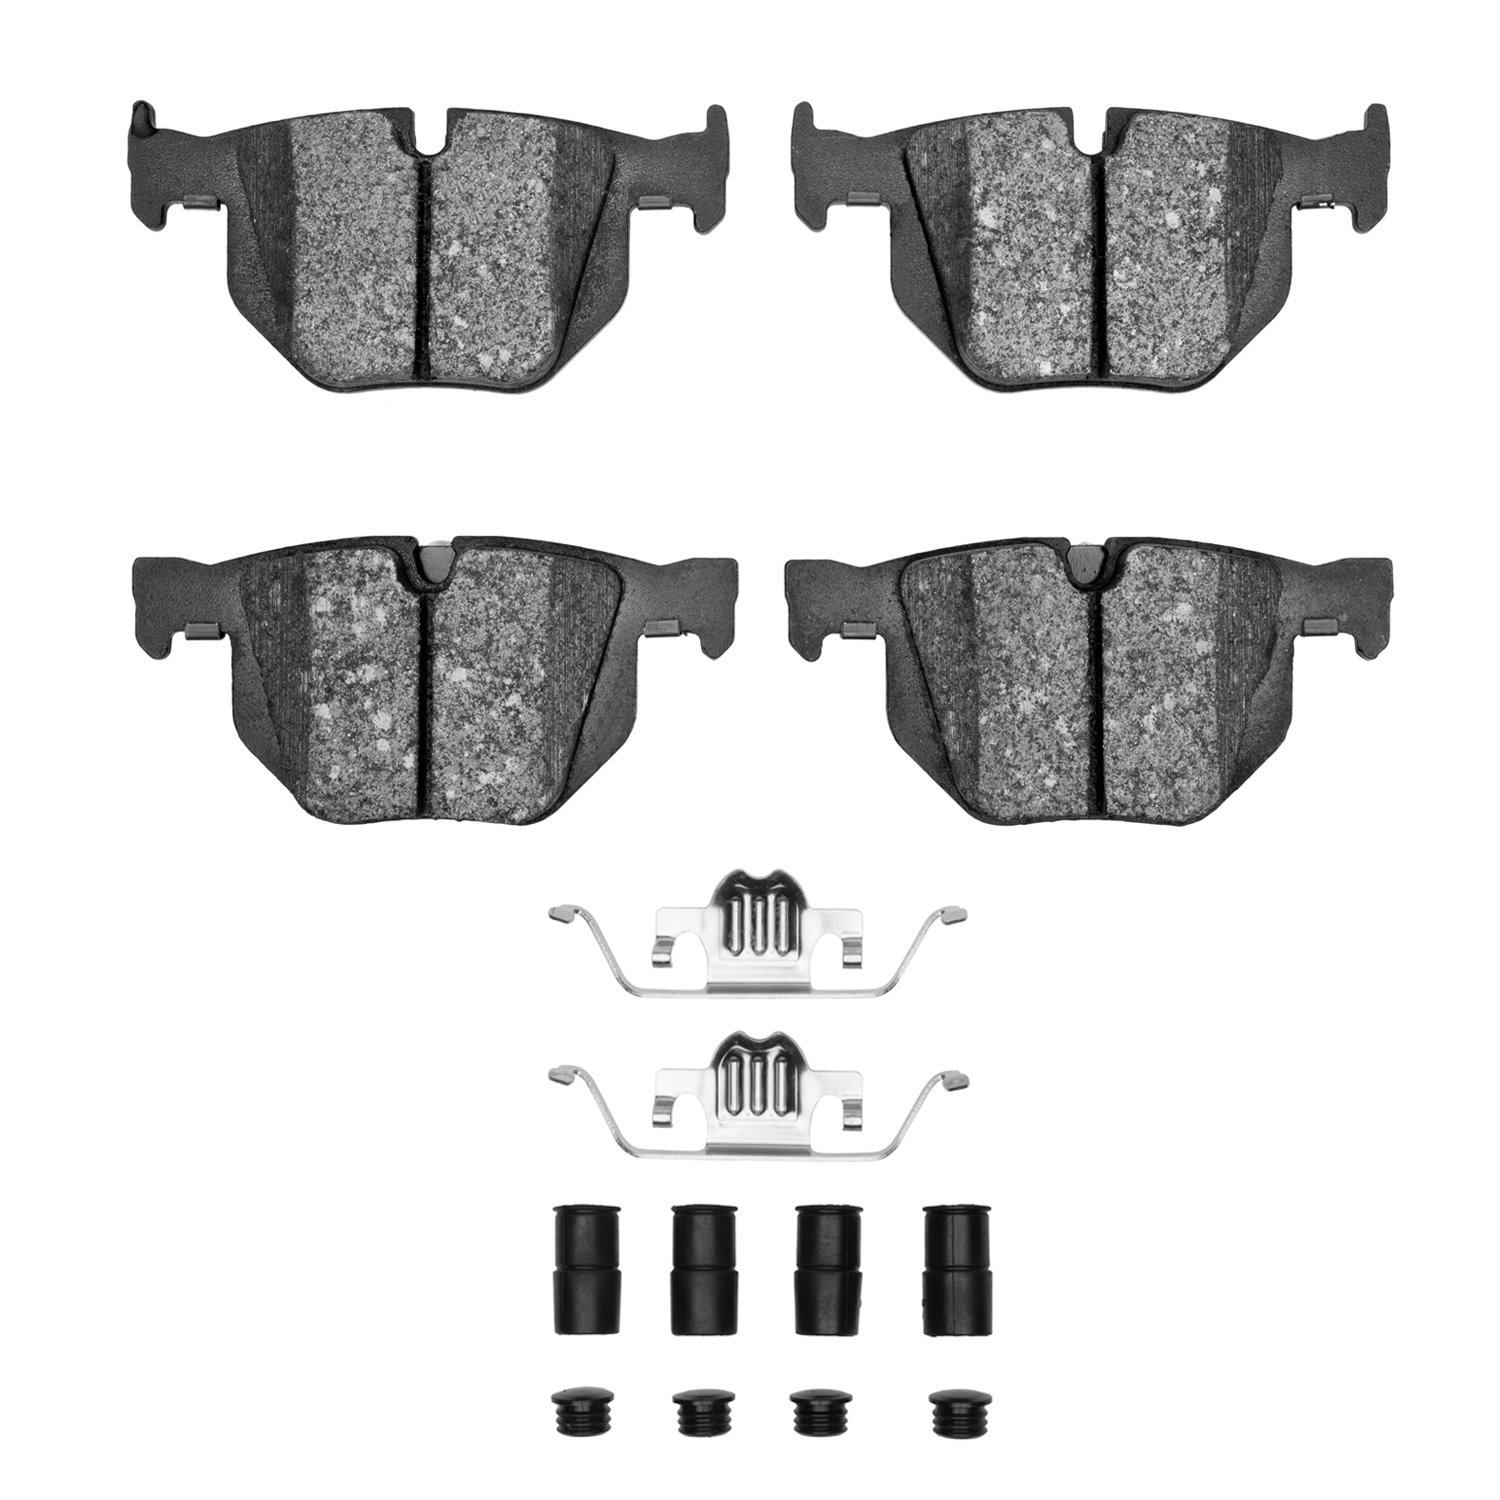 1552-1042-01 5000 Advanced Low-Metallic Brake Pads & Hardware Kit, 2007-2014 BMW, Position: Rear